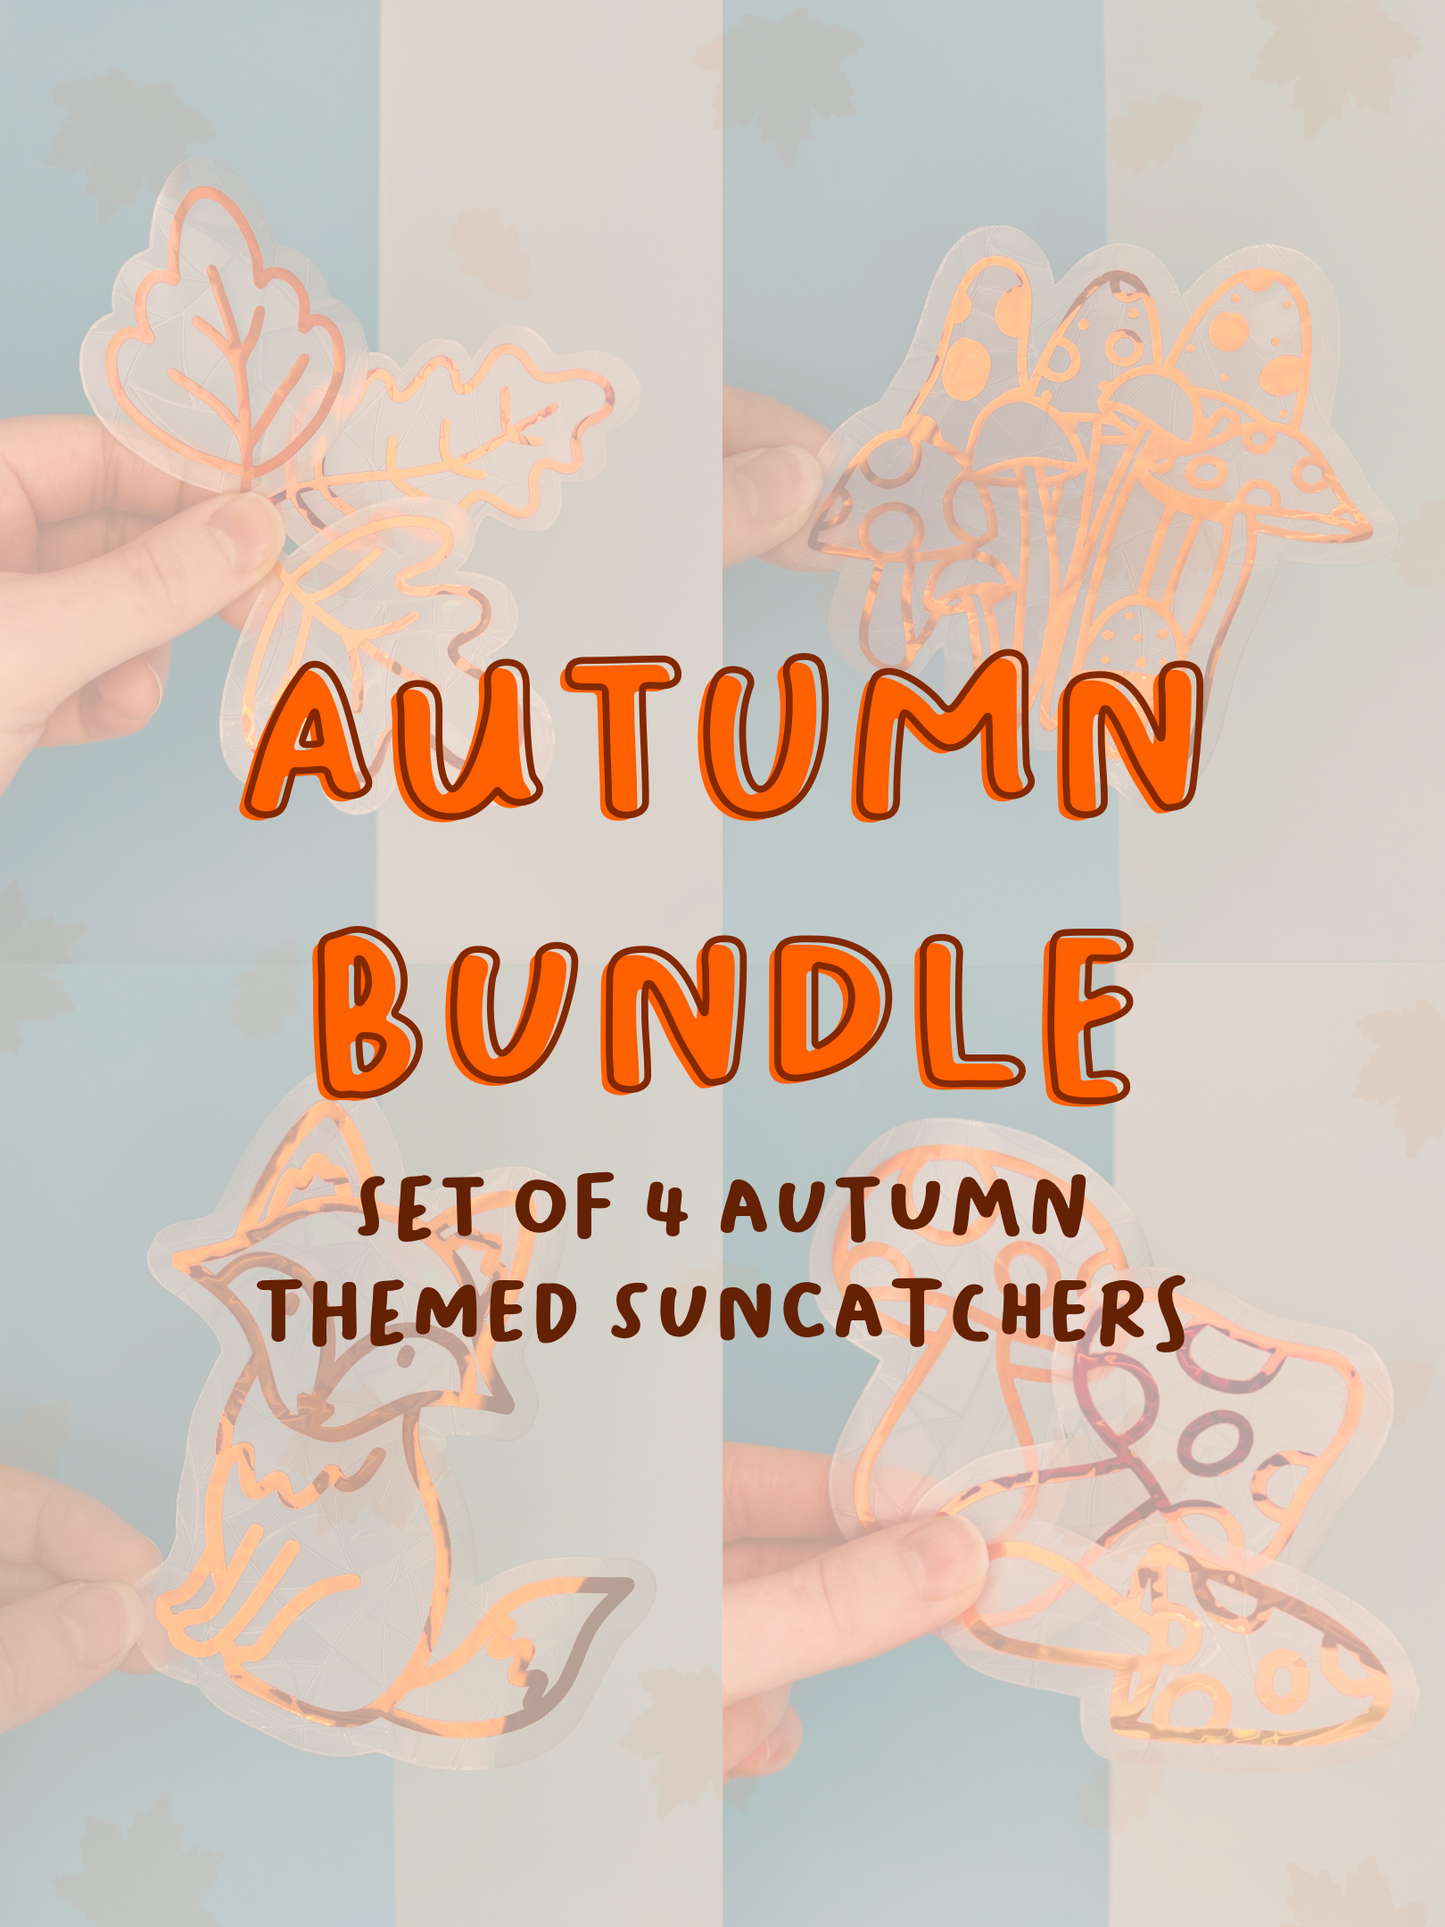 Autumn Suncatcher Bundle